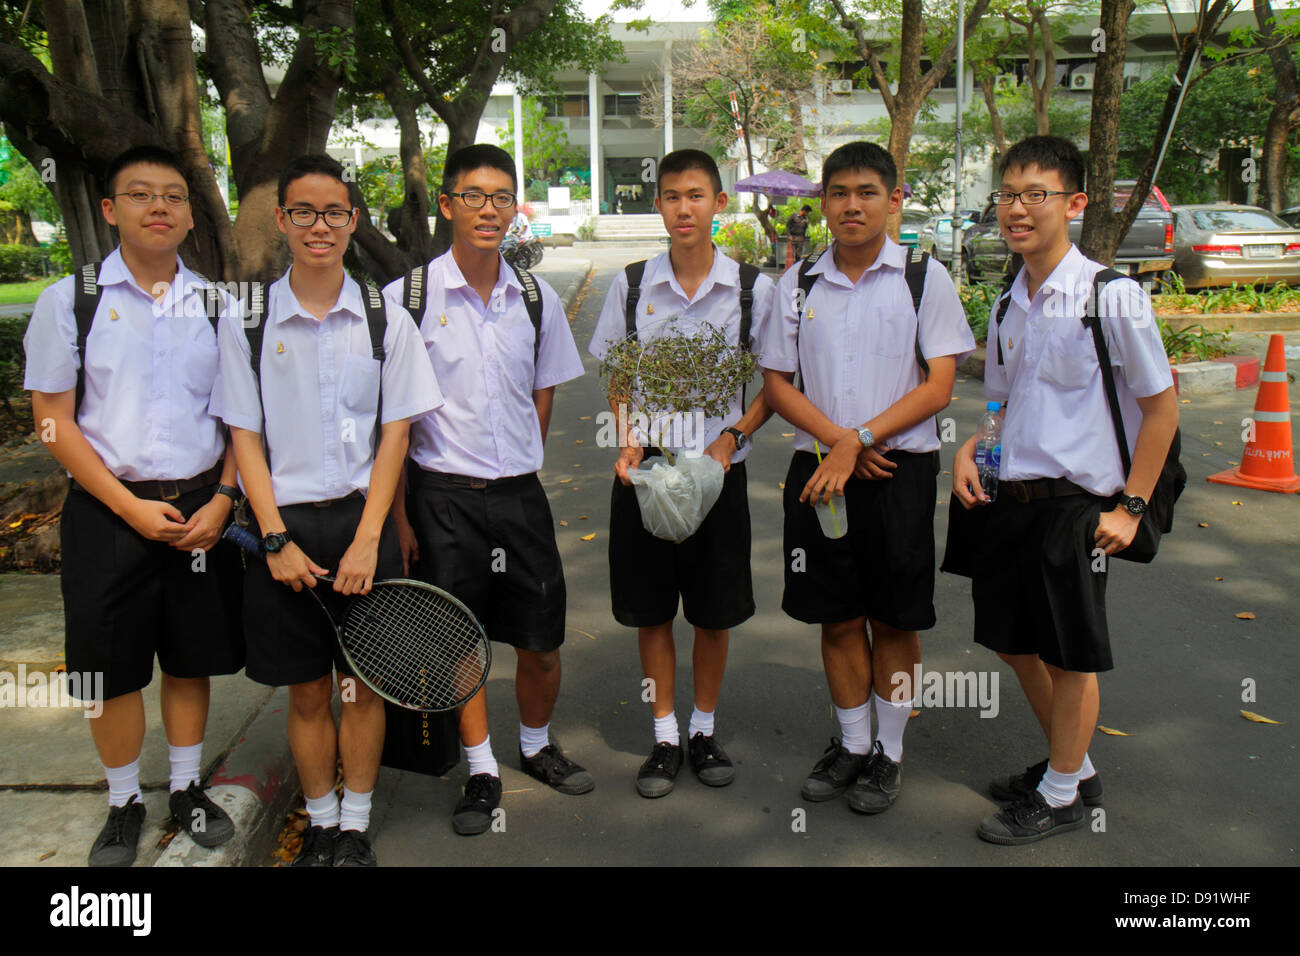 Uniforme escolar tailandés fotografías e imágenes de alta resolución - Alamy